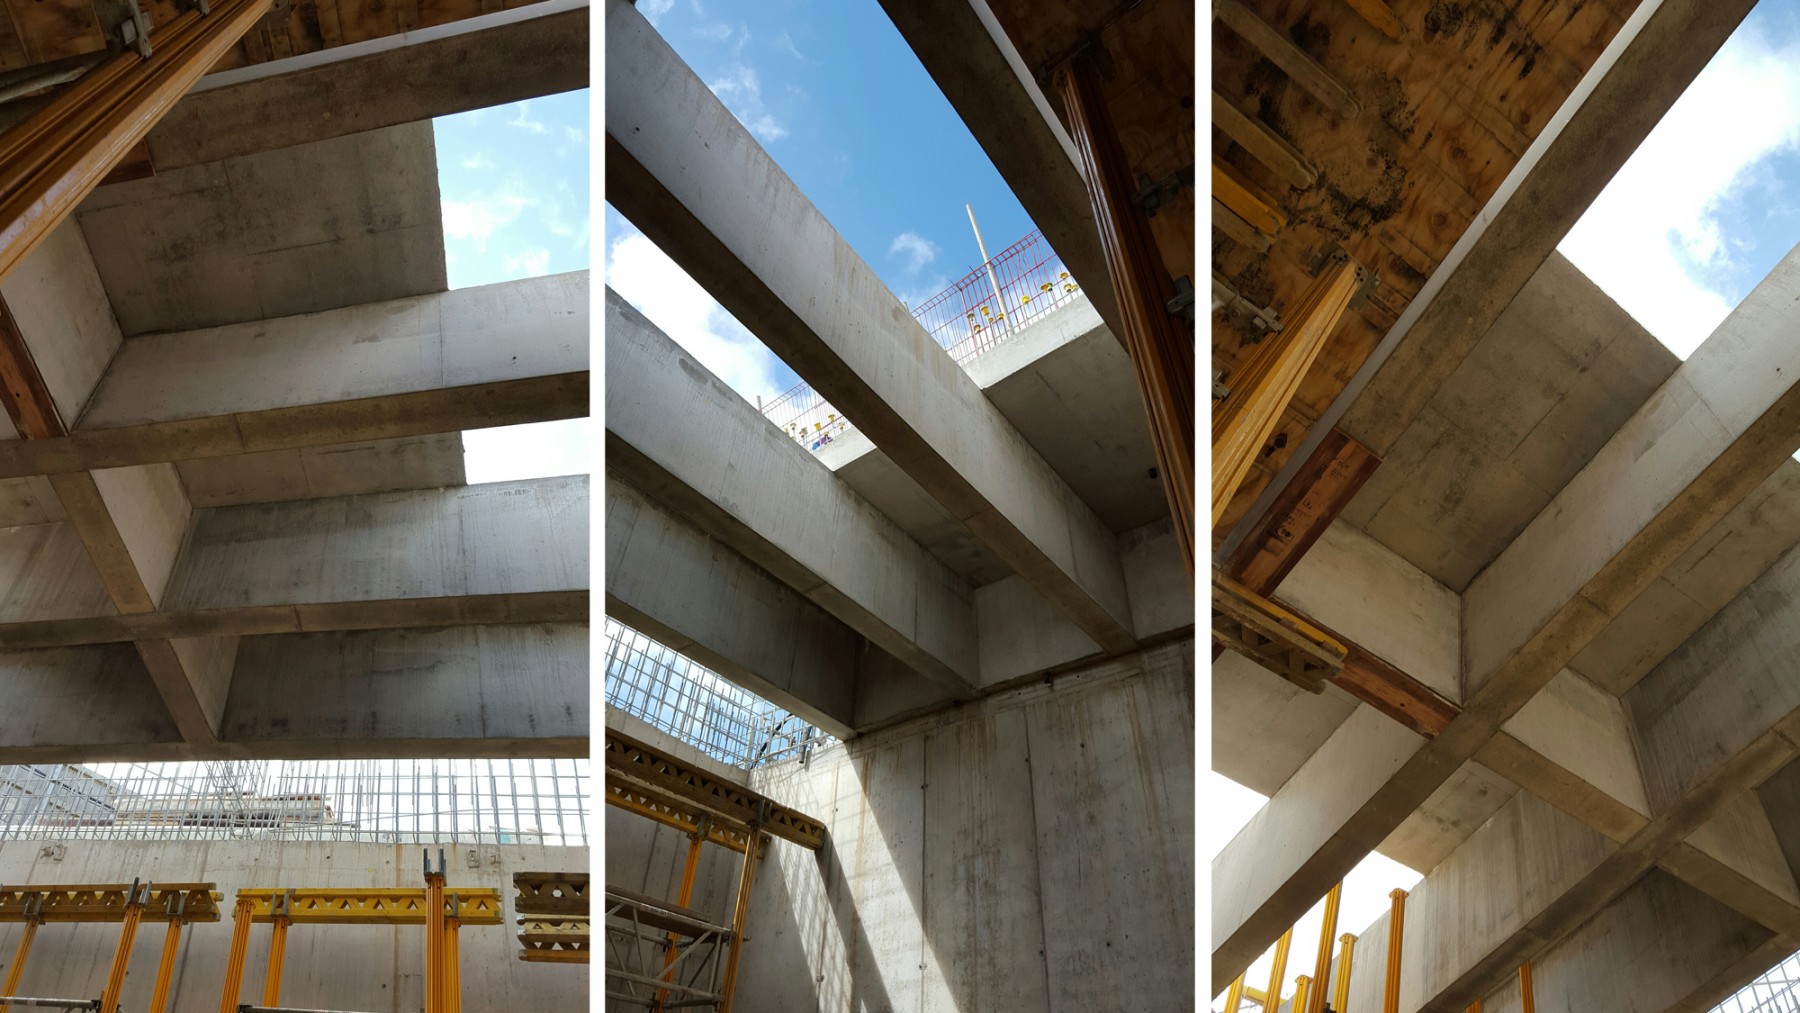 Jamie-fobert-architecs-in-situ-concrete-roof-gallery-museum-tate-st-ives-construction